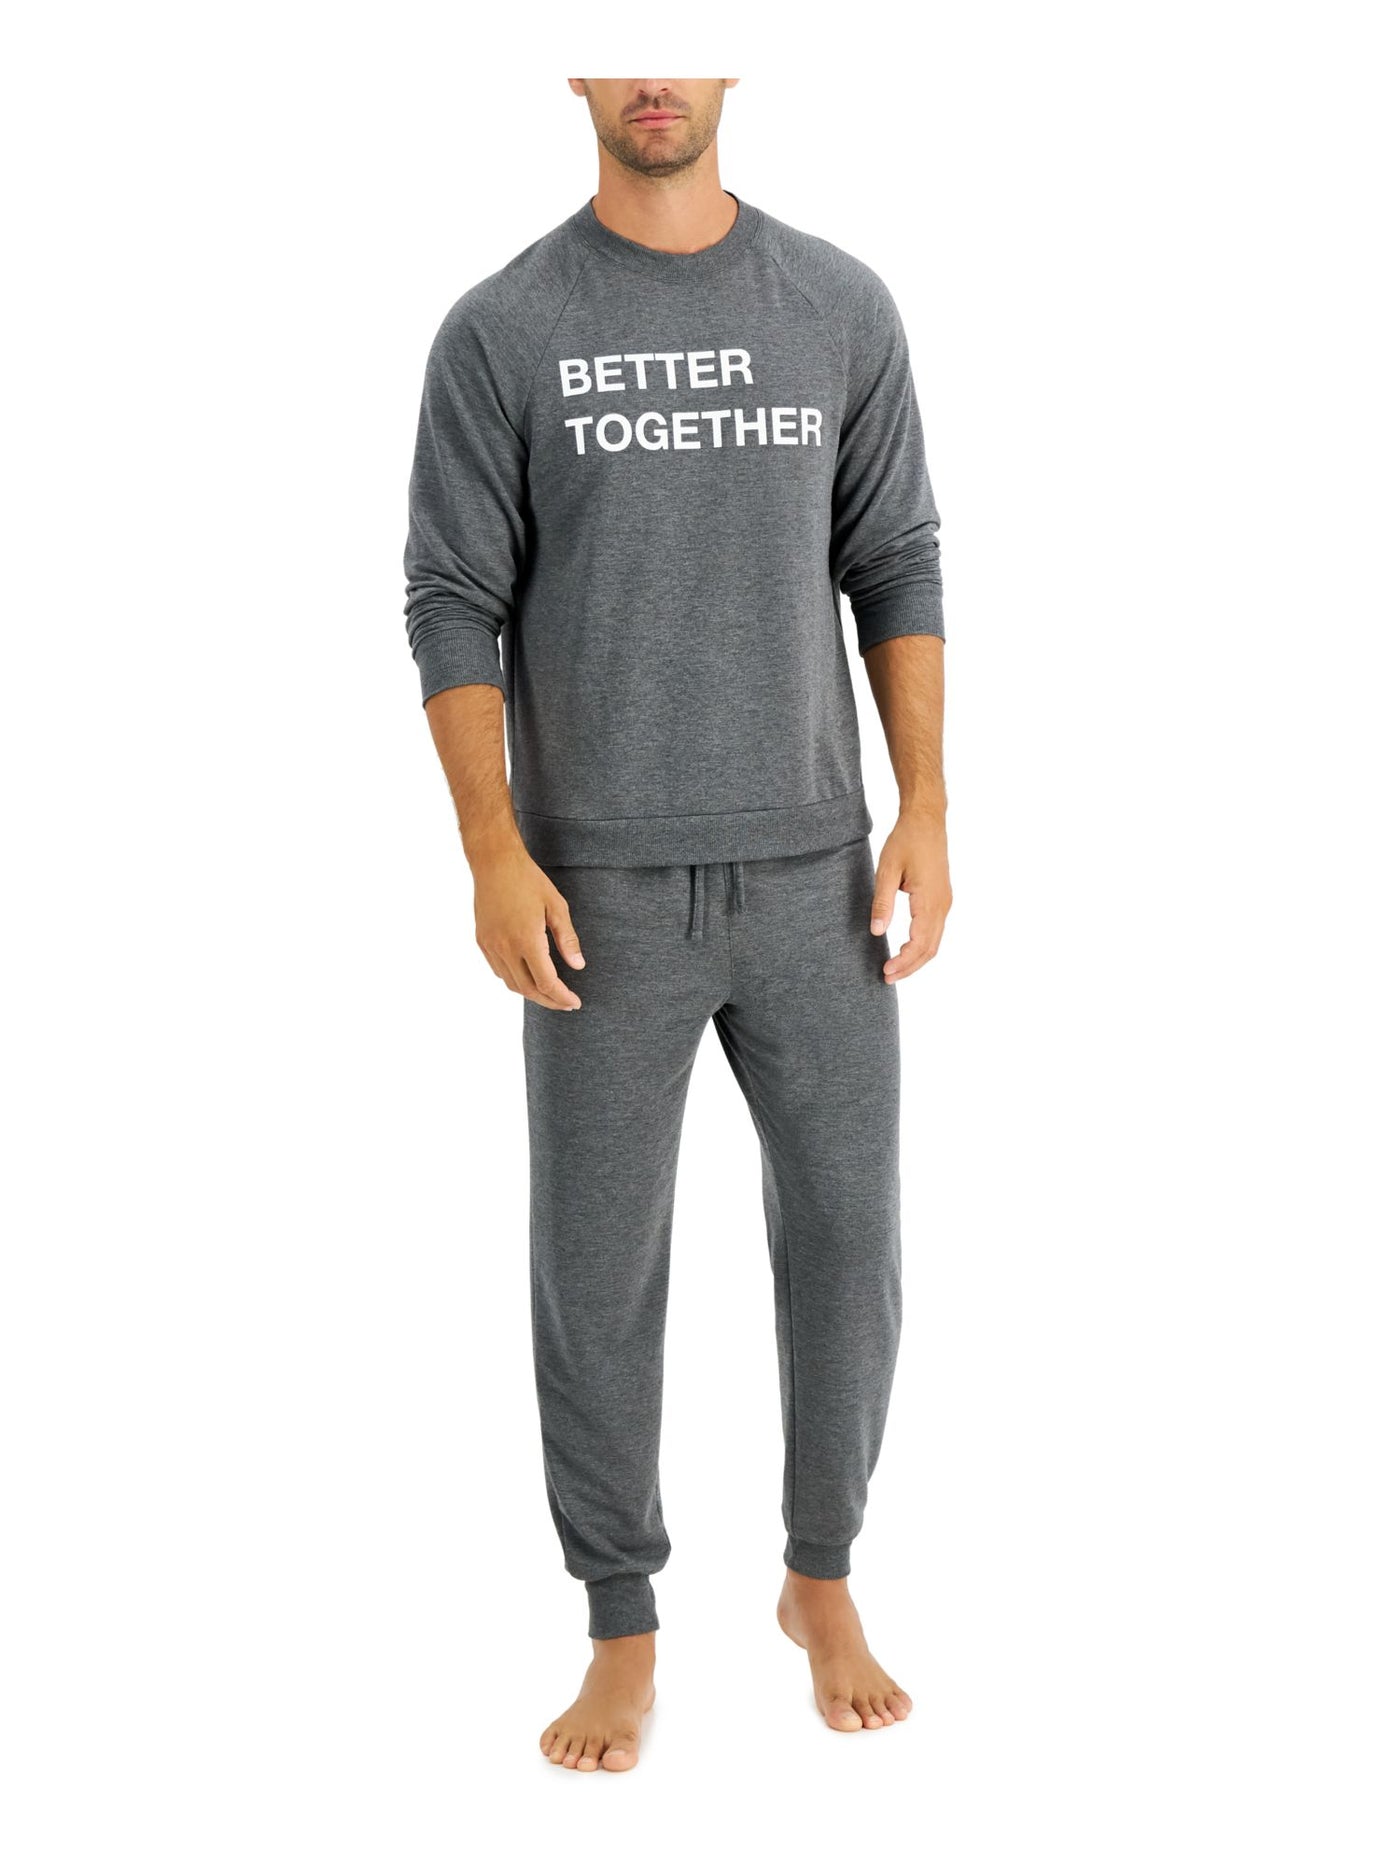 FAMILY PJs Mens Gray Graphic Drawstring T-Shirt Top Cuffed Pants Pajamas XL